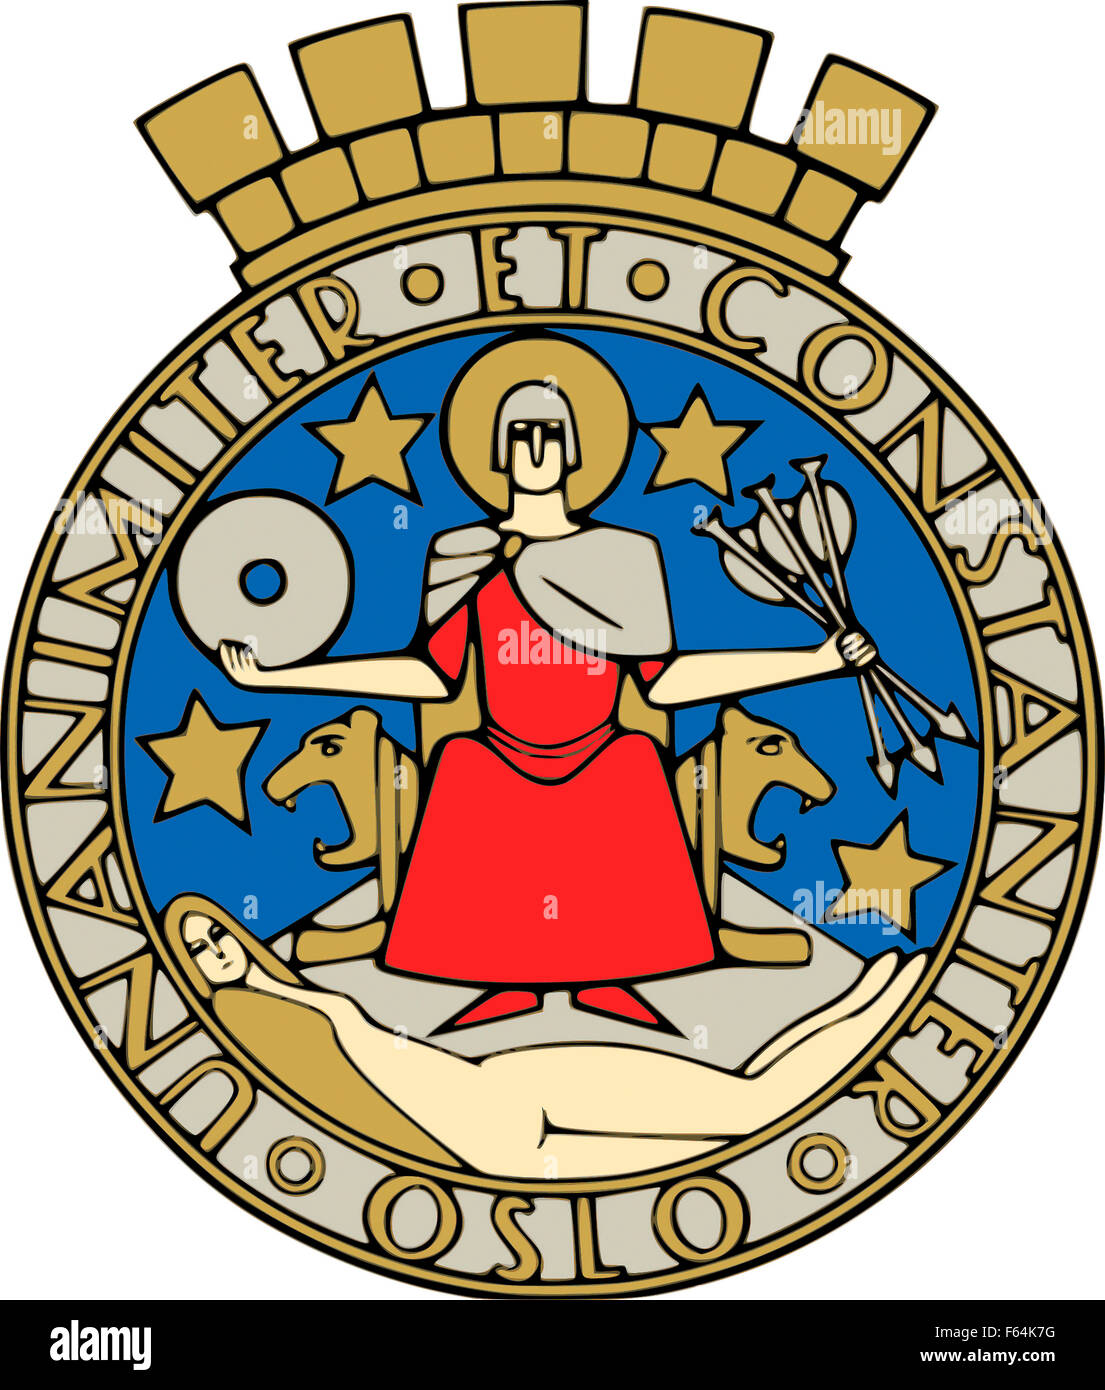 Coat of arms of the Norwegian capital city Oslo Stock Photo - Alamy